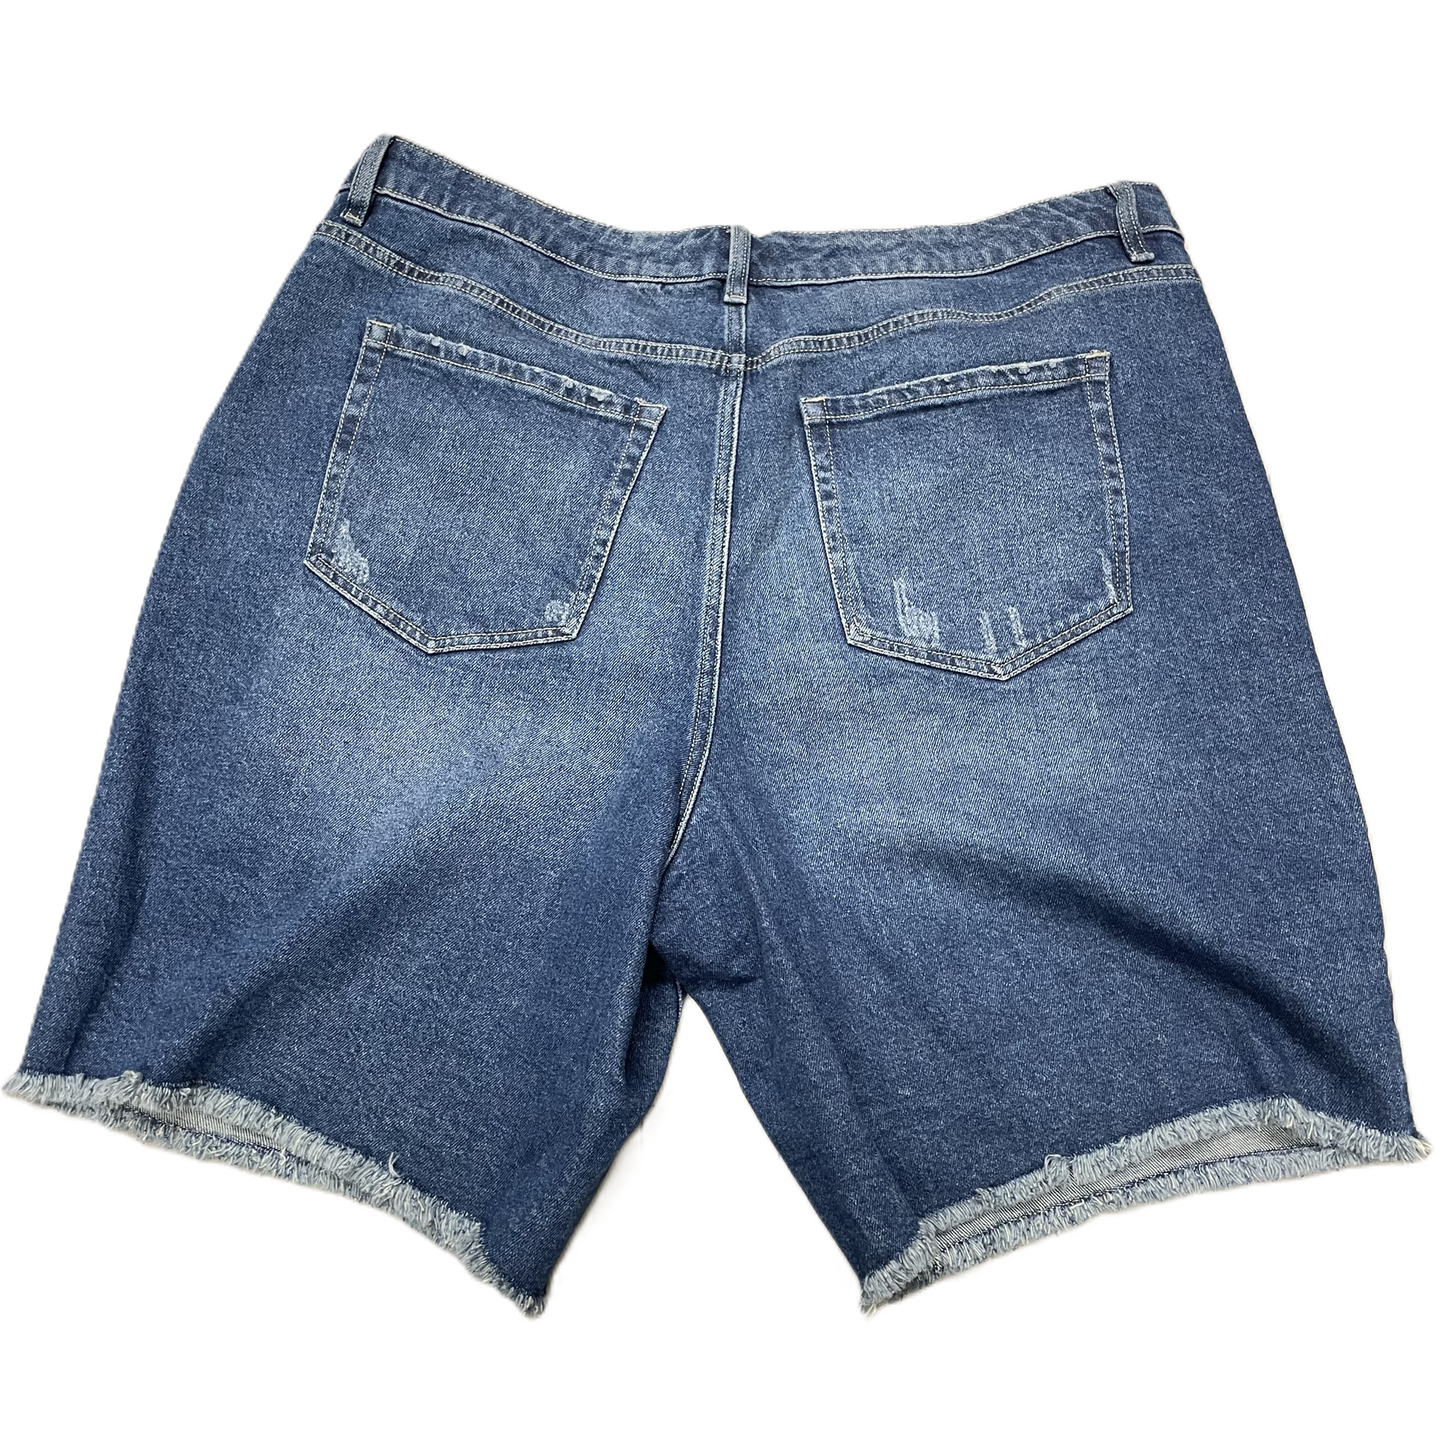 Blue Denim Shorts By Lane Bryant, Size: 18